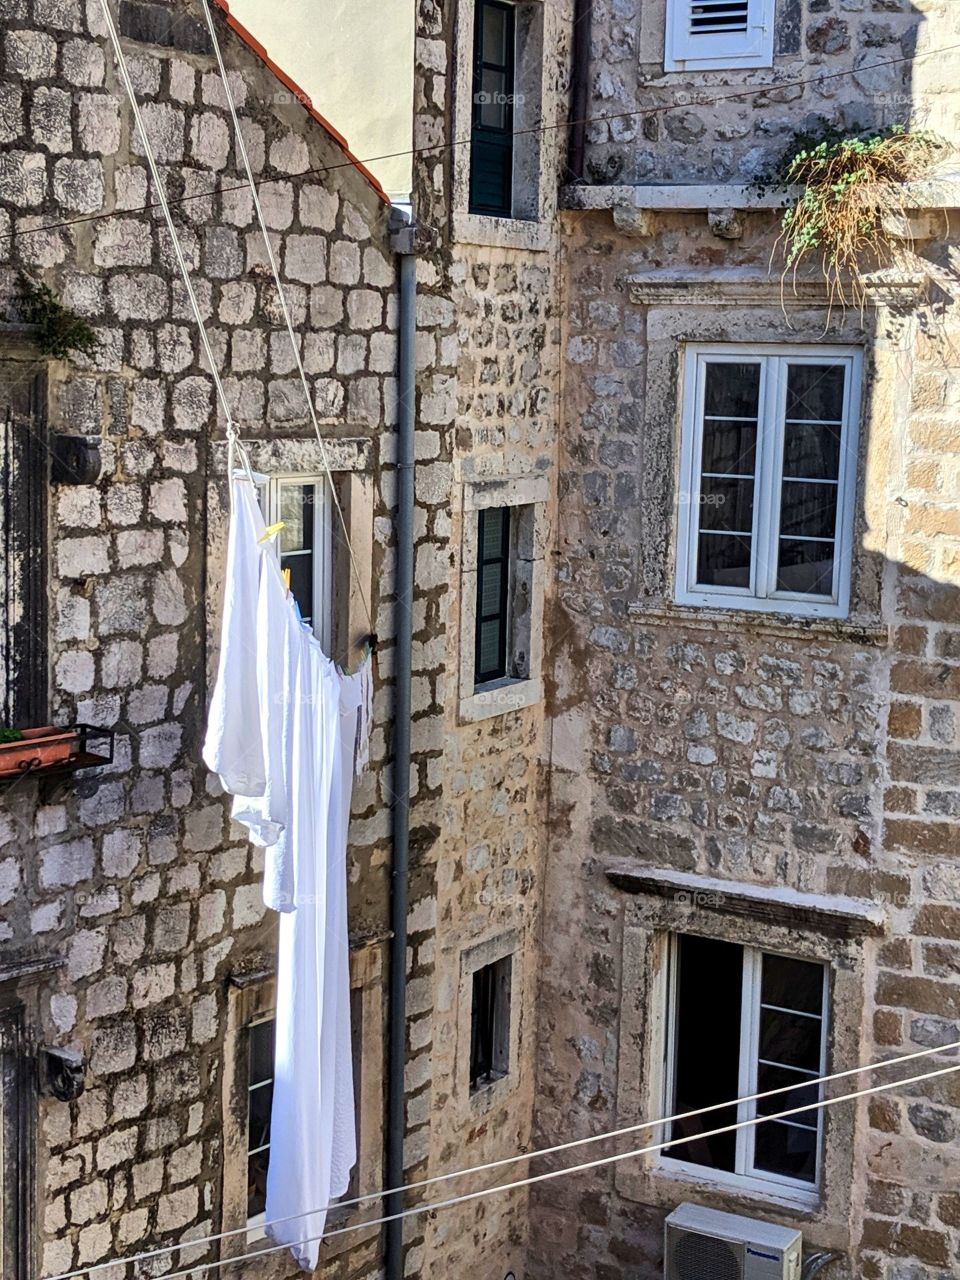 wash day in Old City Dubrovnik